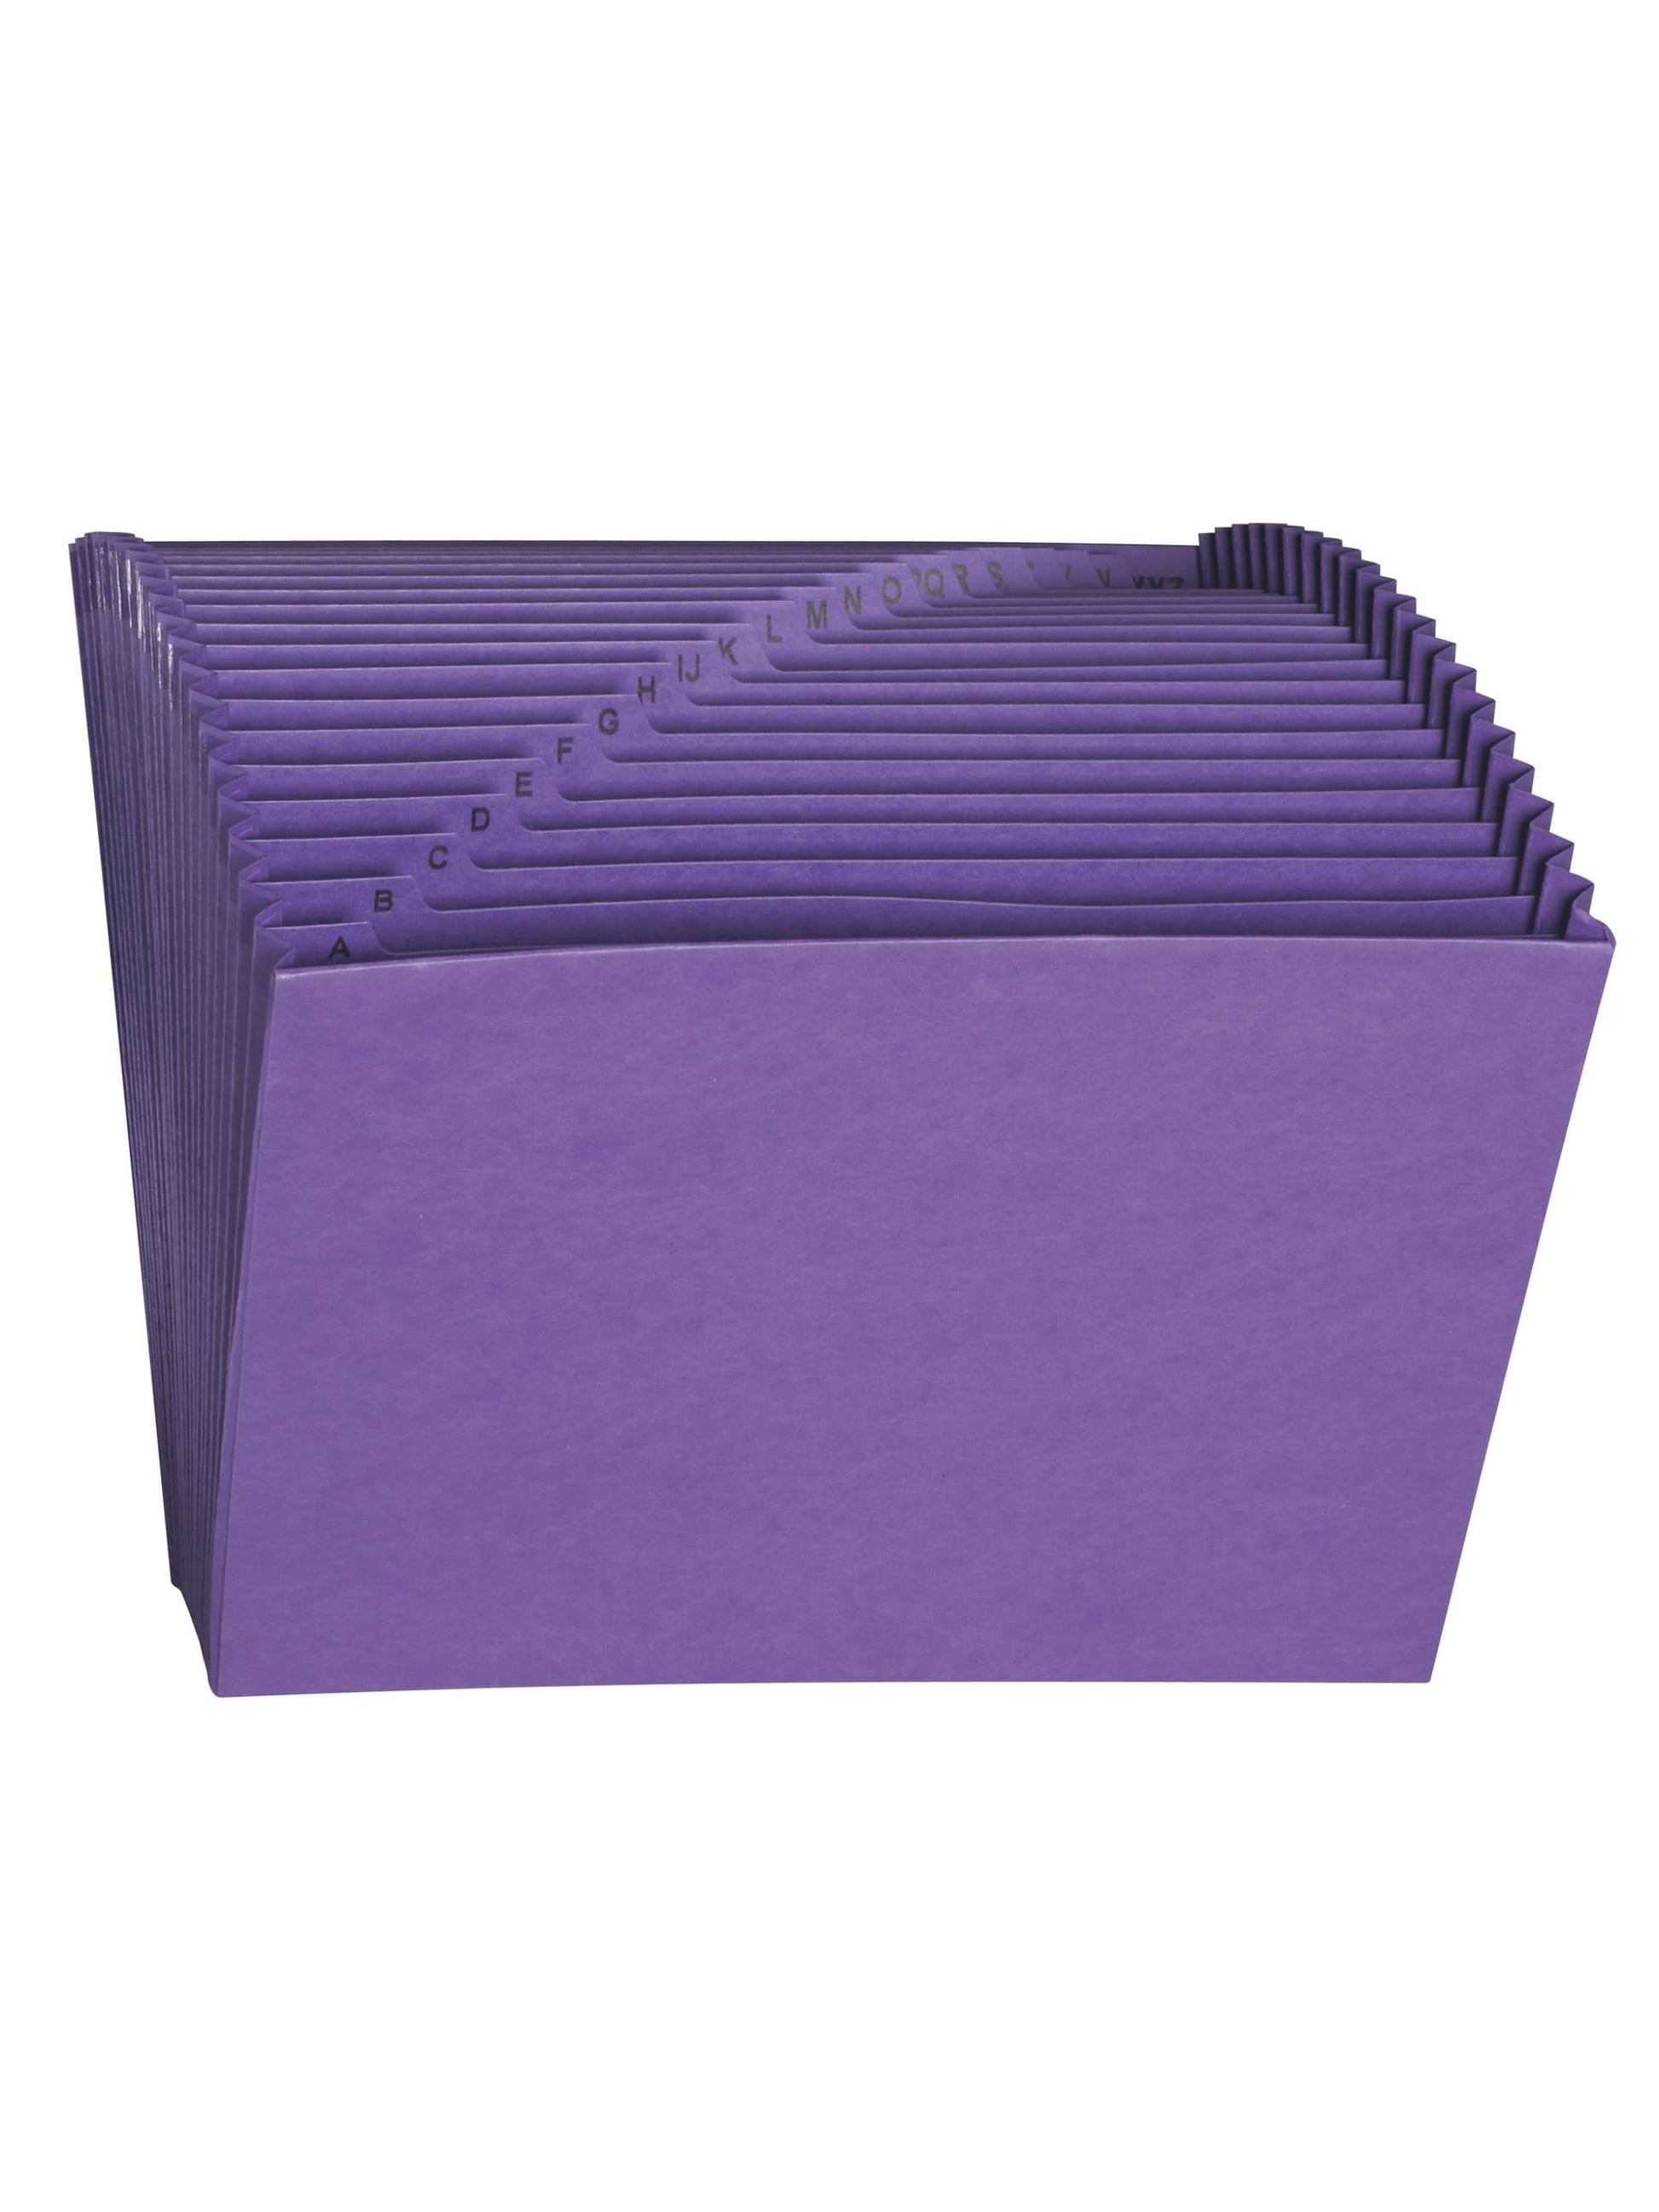 Colored Expanding Files, 21 Pockets, Alphabetic A-Z, Purple Color, Letter Size, Set of 1, 086486707213